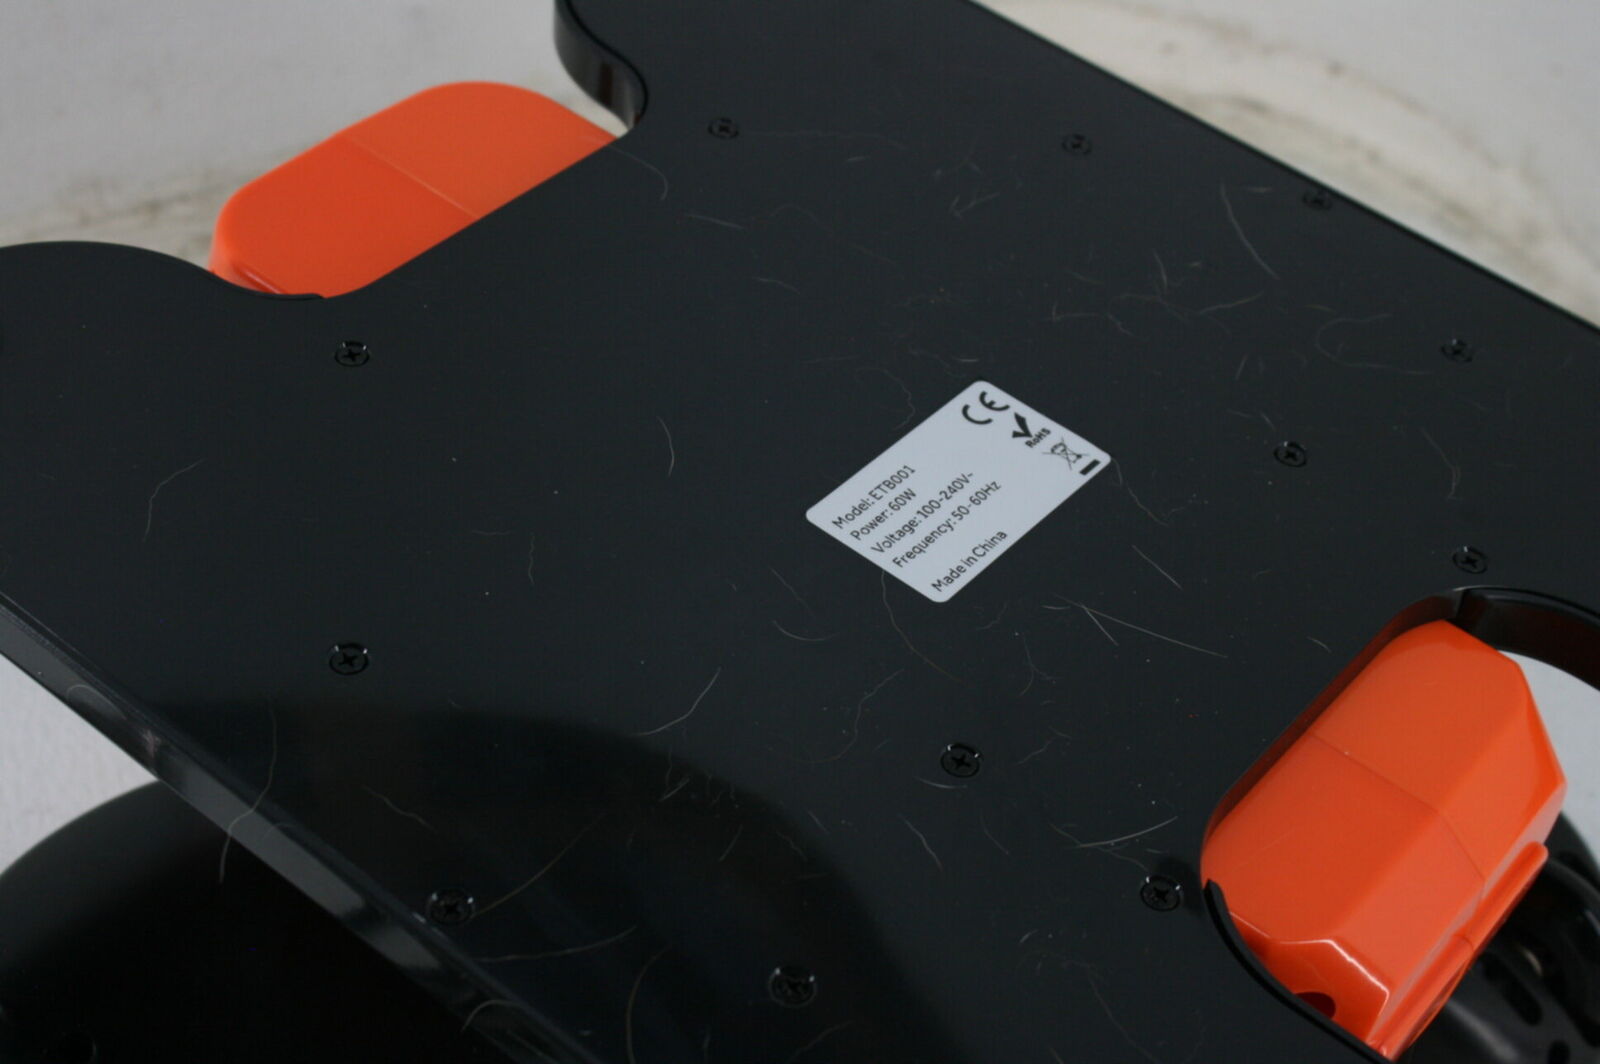 Compact Orange Elliptical Pedal Exerciser: Rotai ETB001